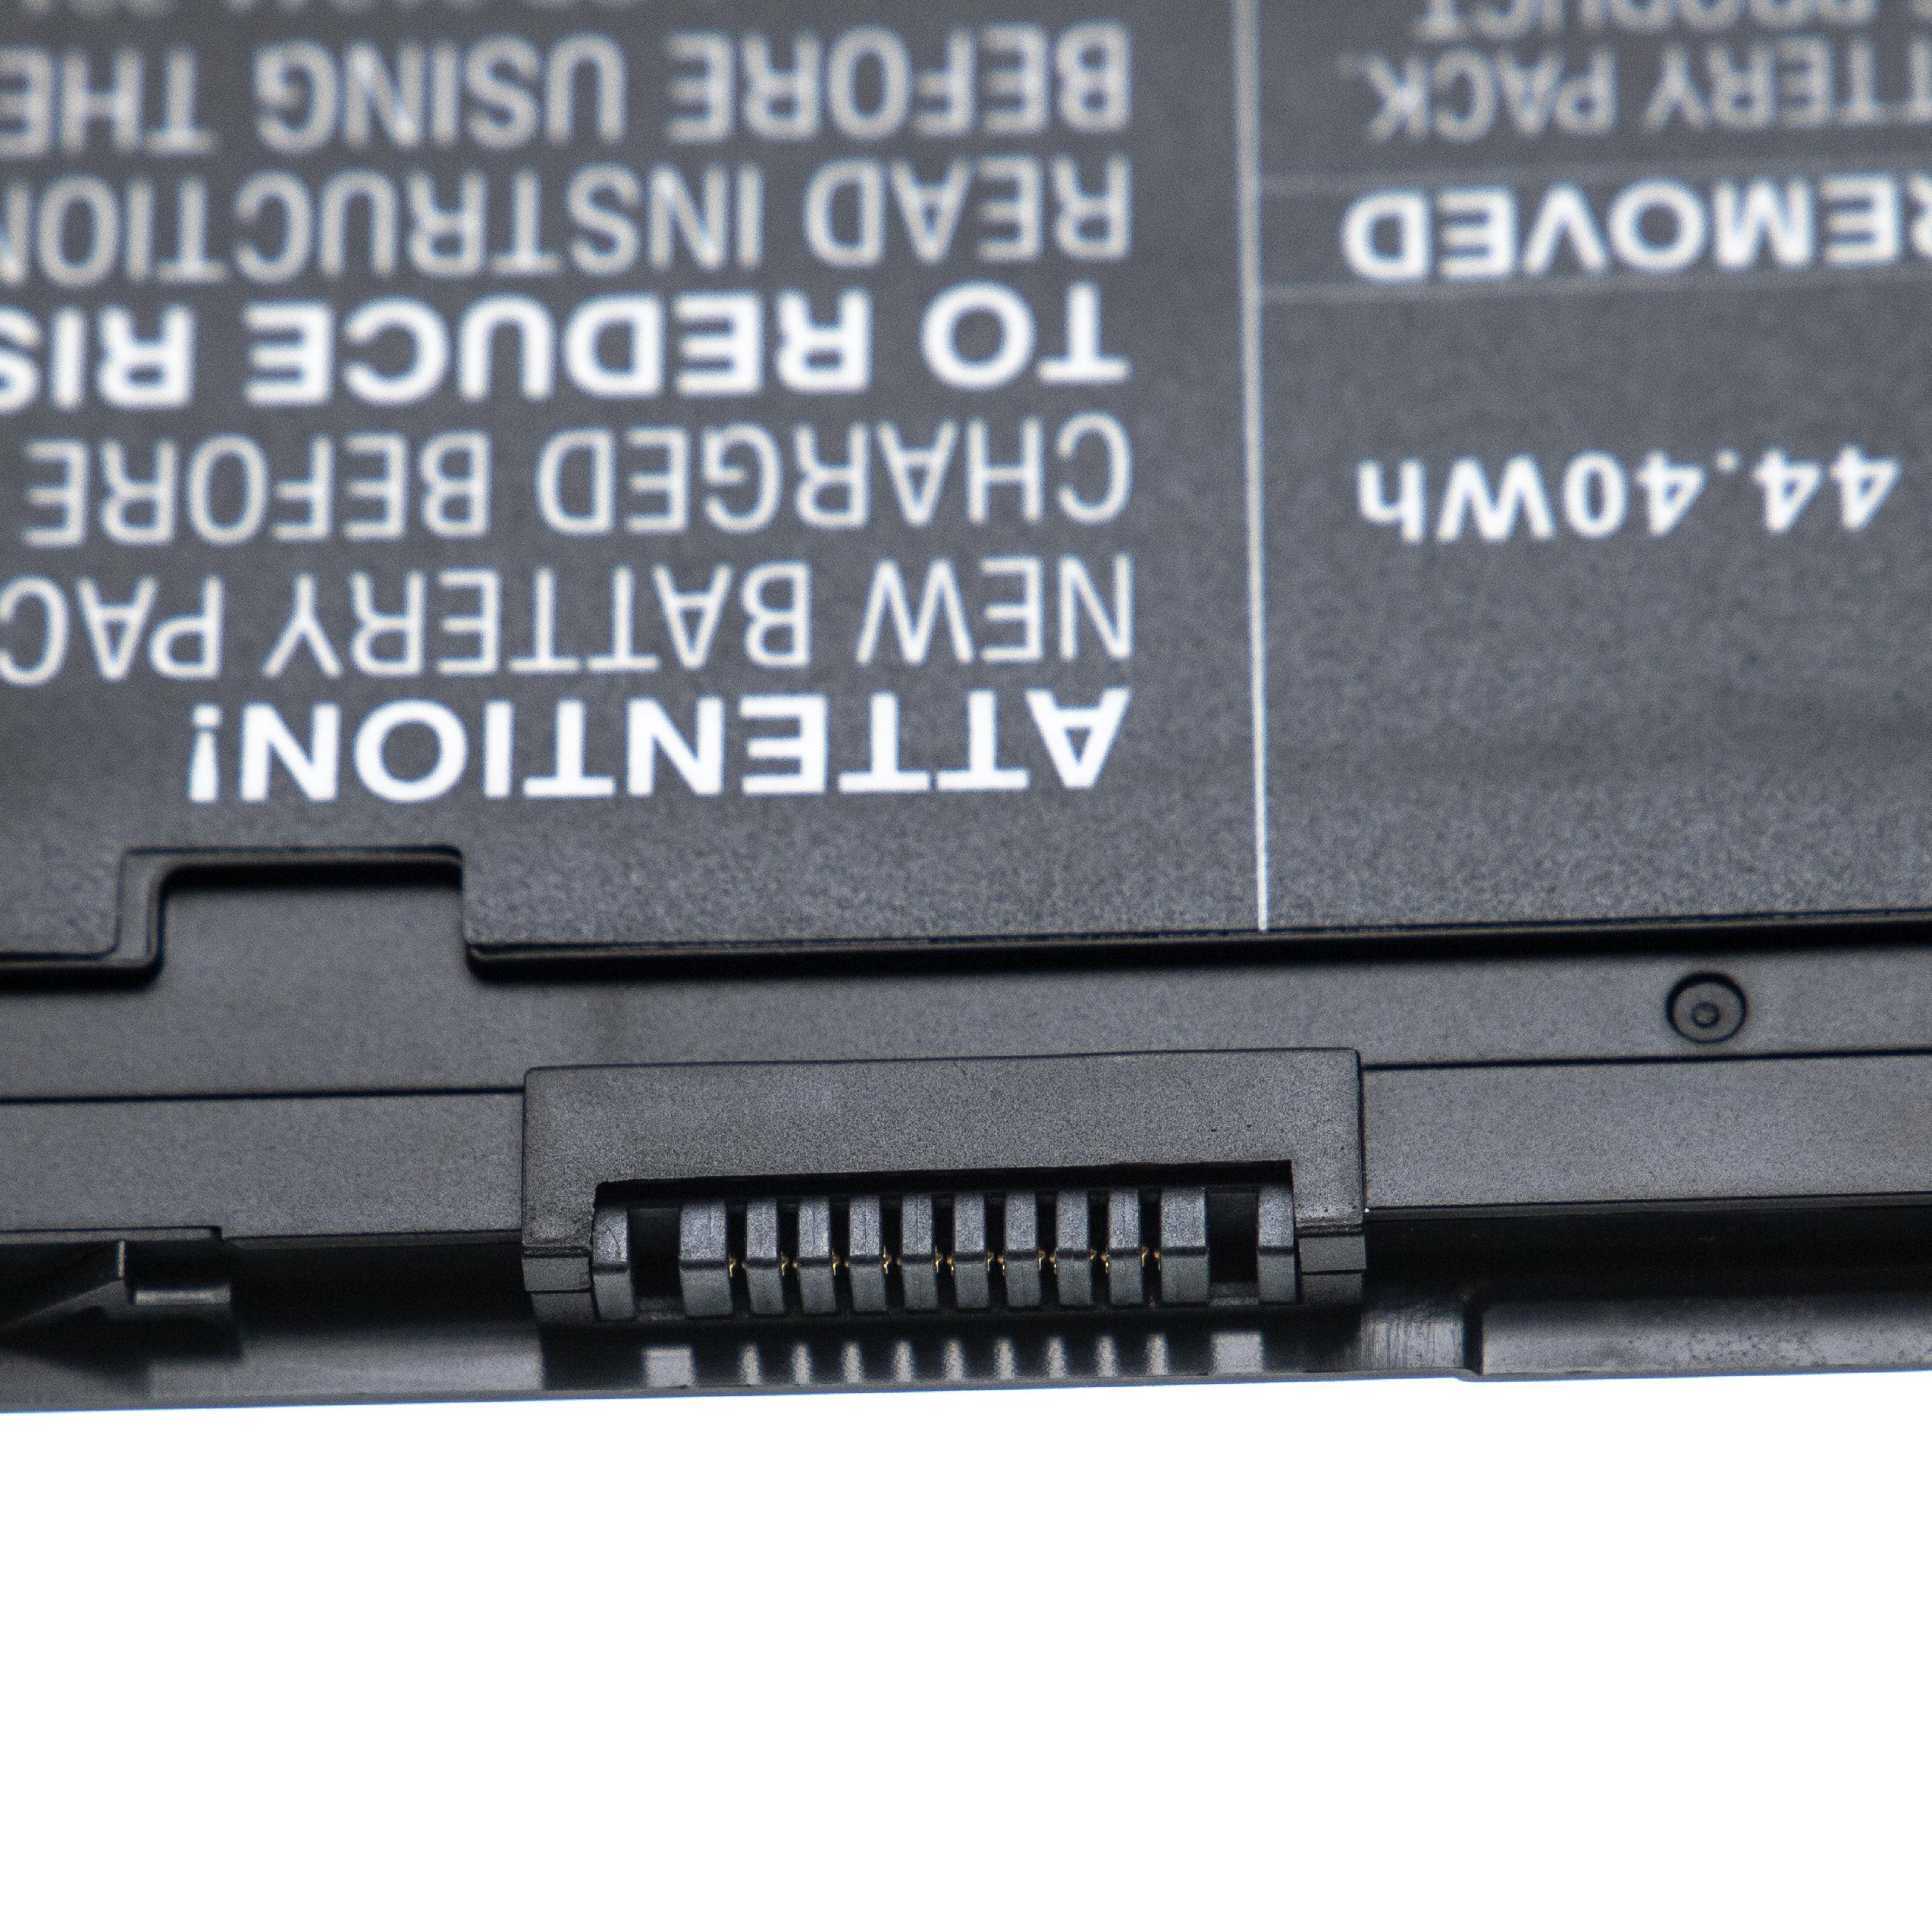 Batterie remplace Dell 0KWFFN, 0J31N7, 0W57CV pour ordinateur portable - 6000mAh 7,4V Li-polymère, noir